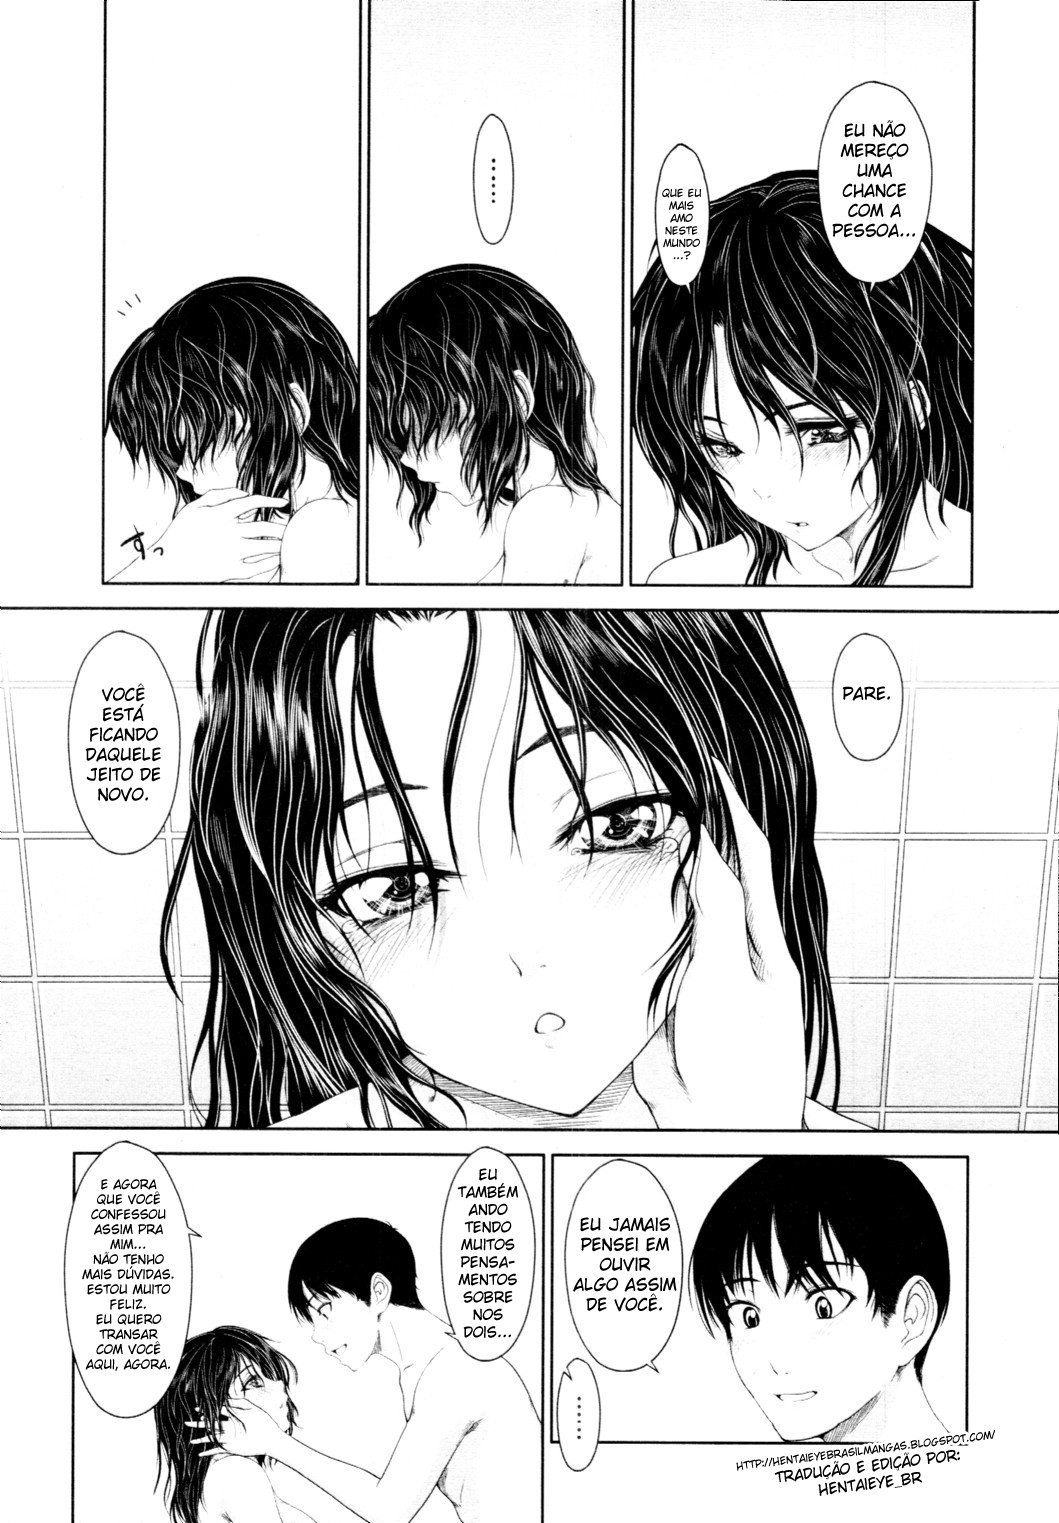 hentaihome.net – Kazumi à irmã deprimida (11)